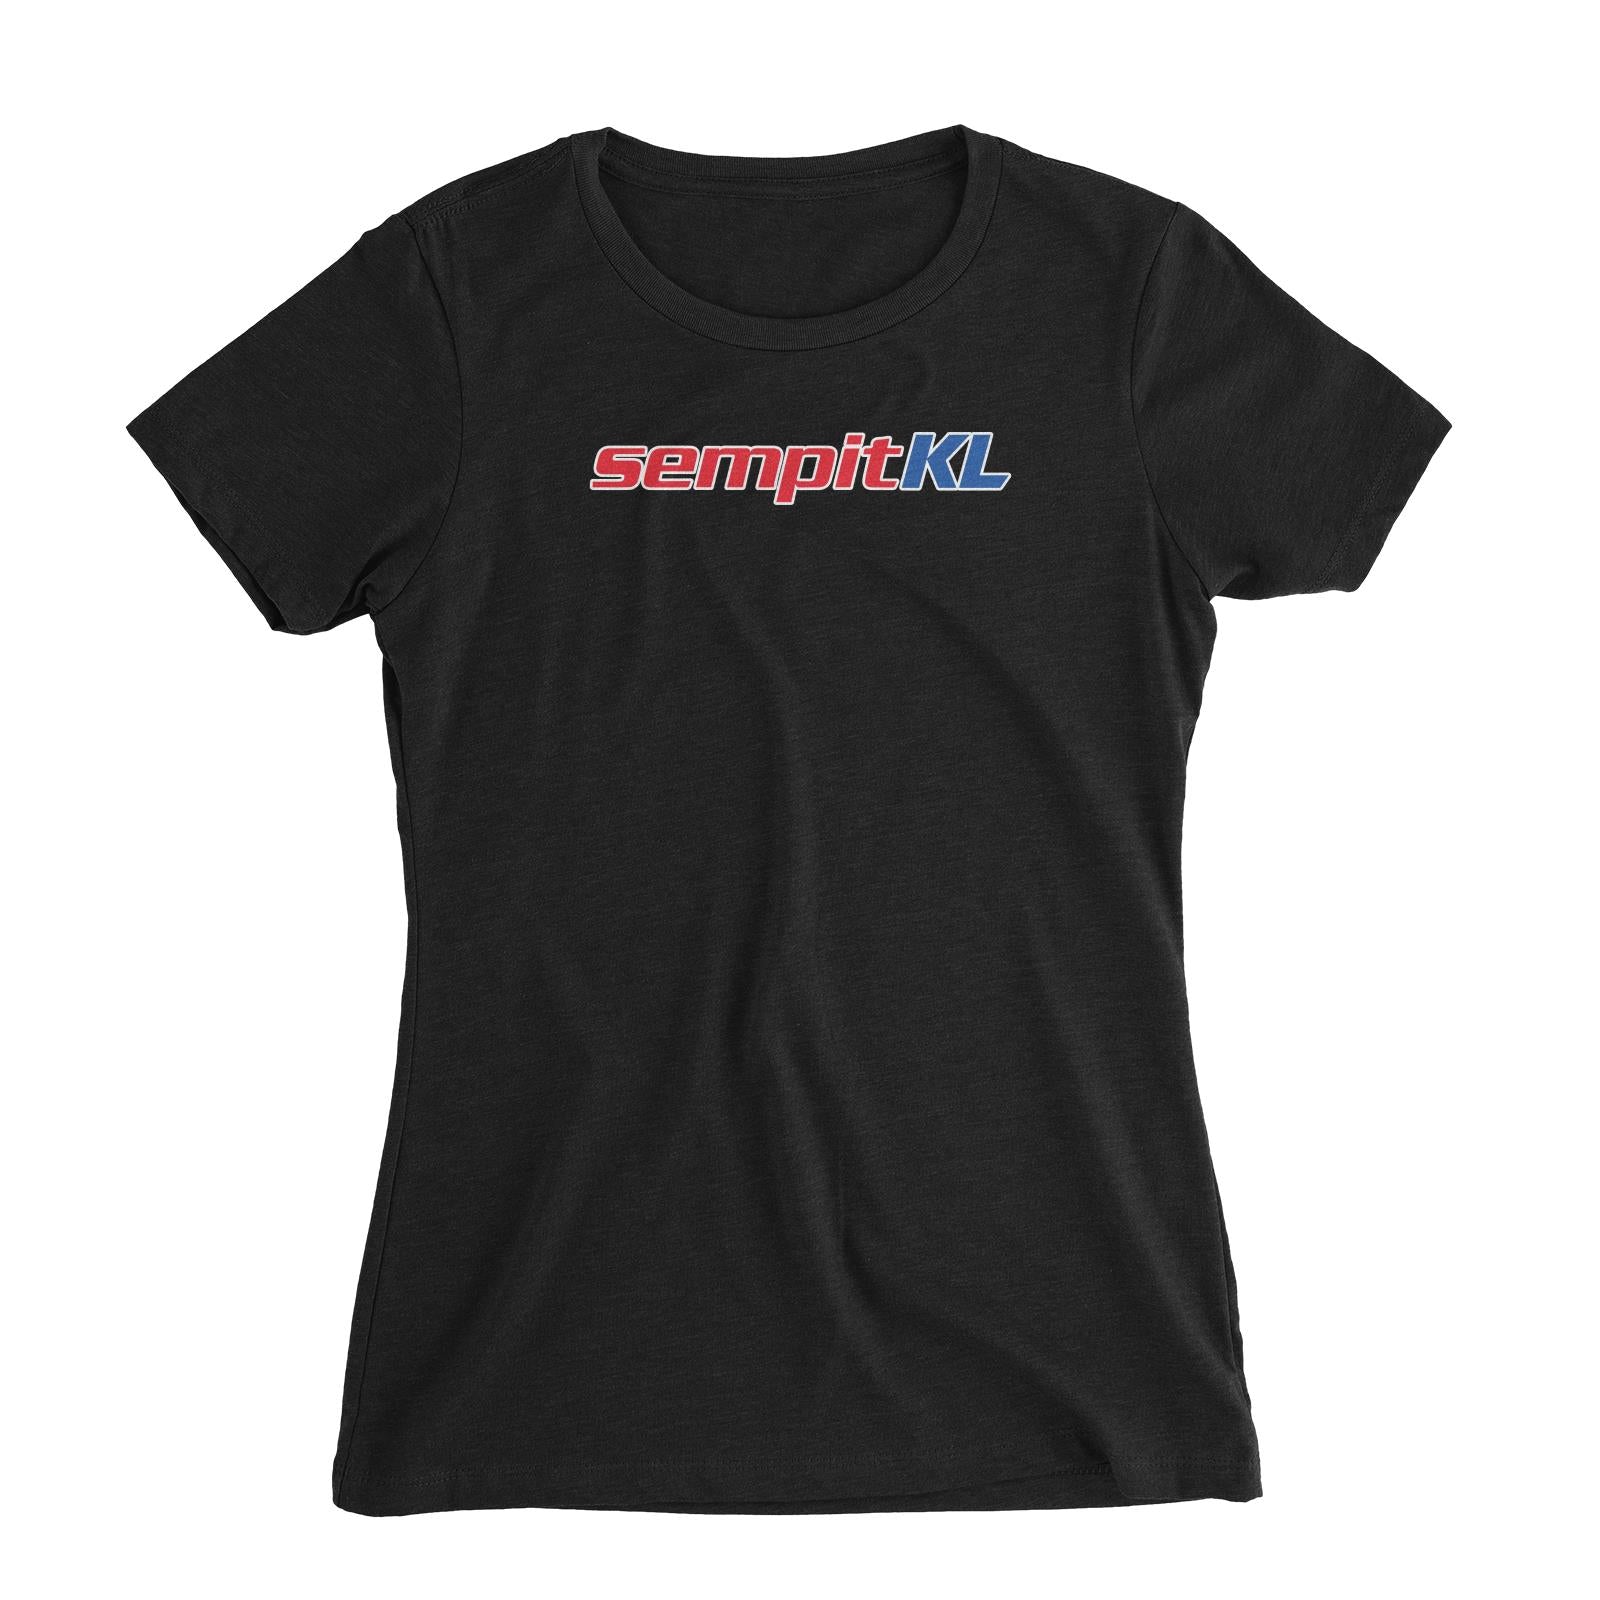 Slang Statement Sempitkl Women's Slim Fit T-Shirt